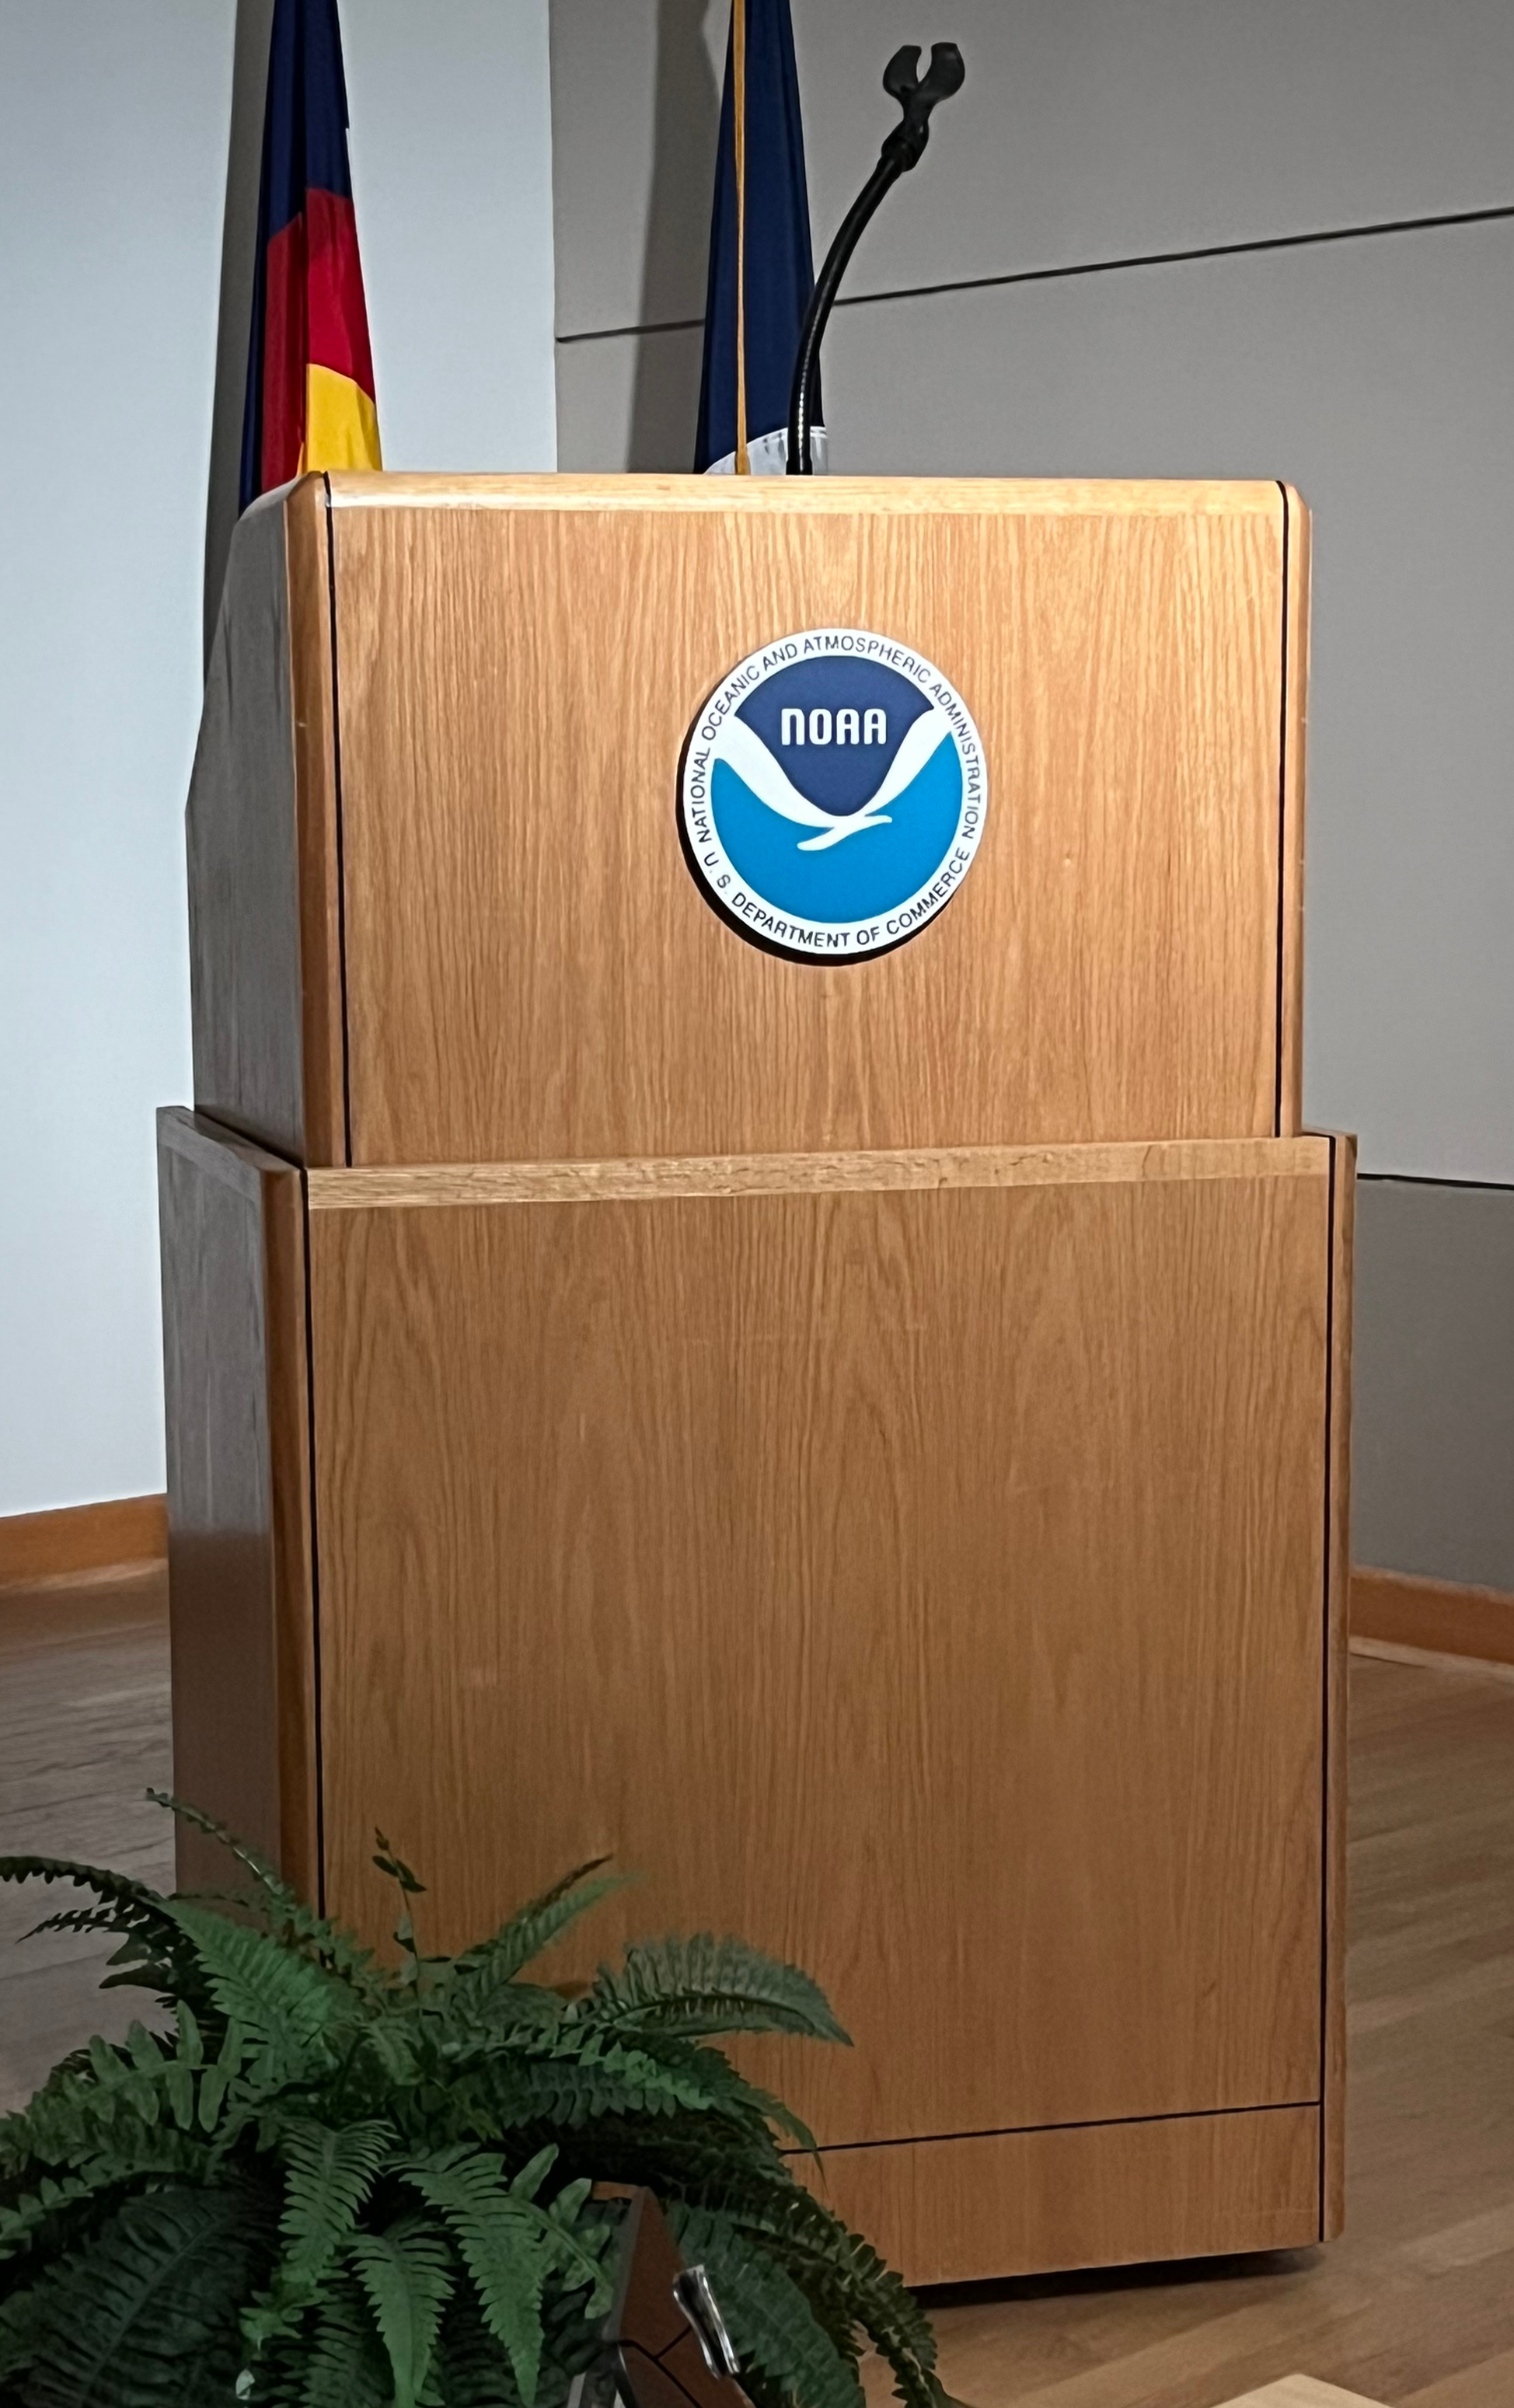 Wood podium with NOAA logo on front